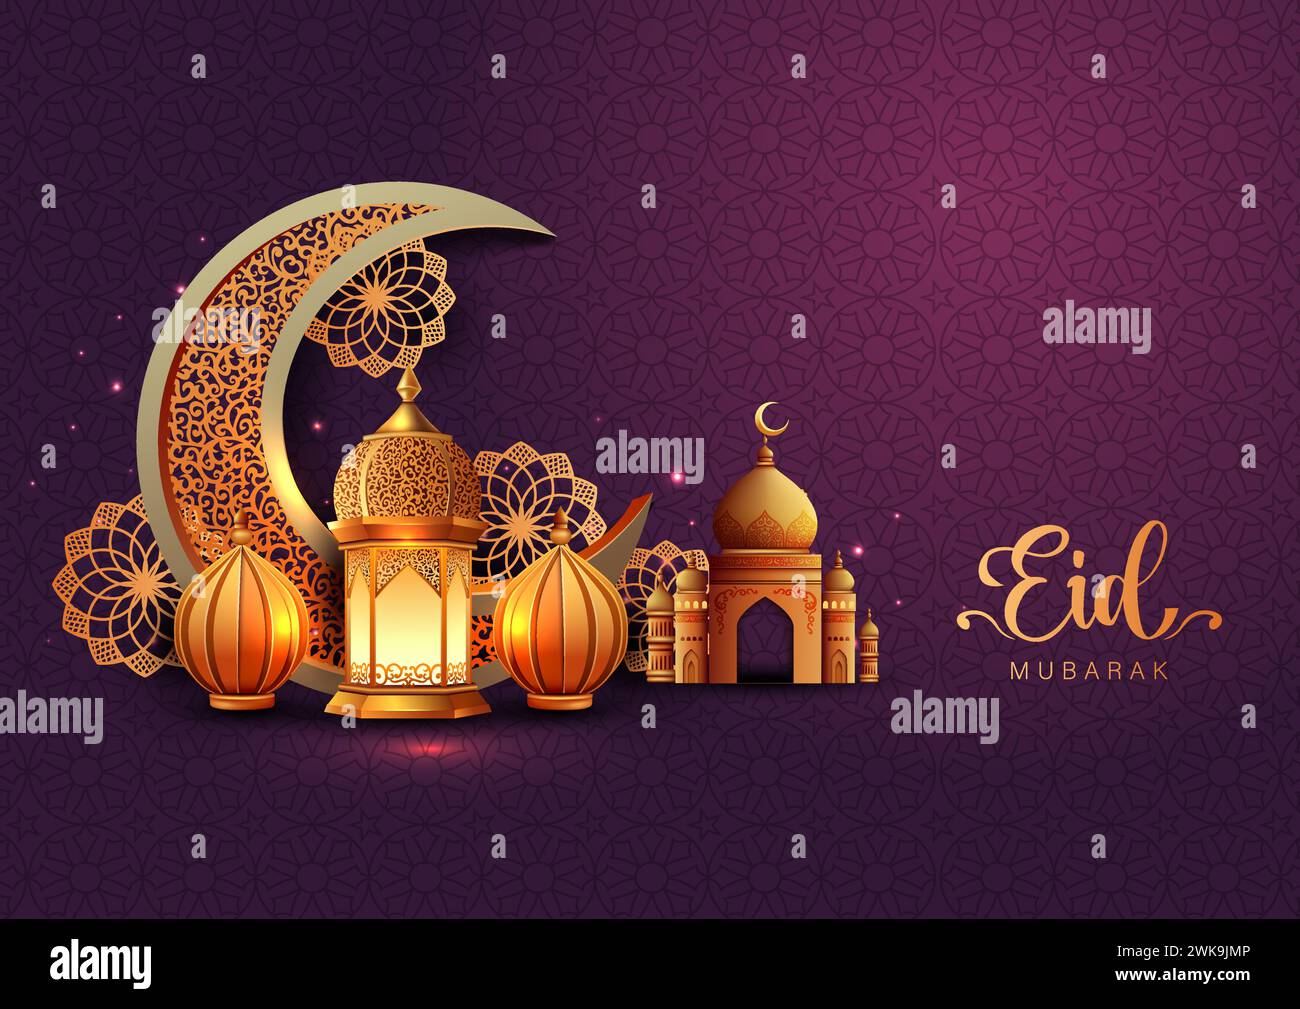 Eid Mubarak Muslim art greetings with golden mosque and maroon background wallpaper. abstract vector illustration design. Stock Vector